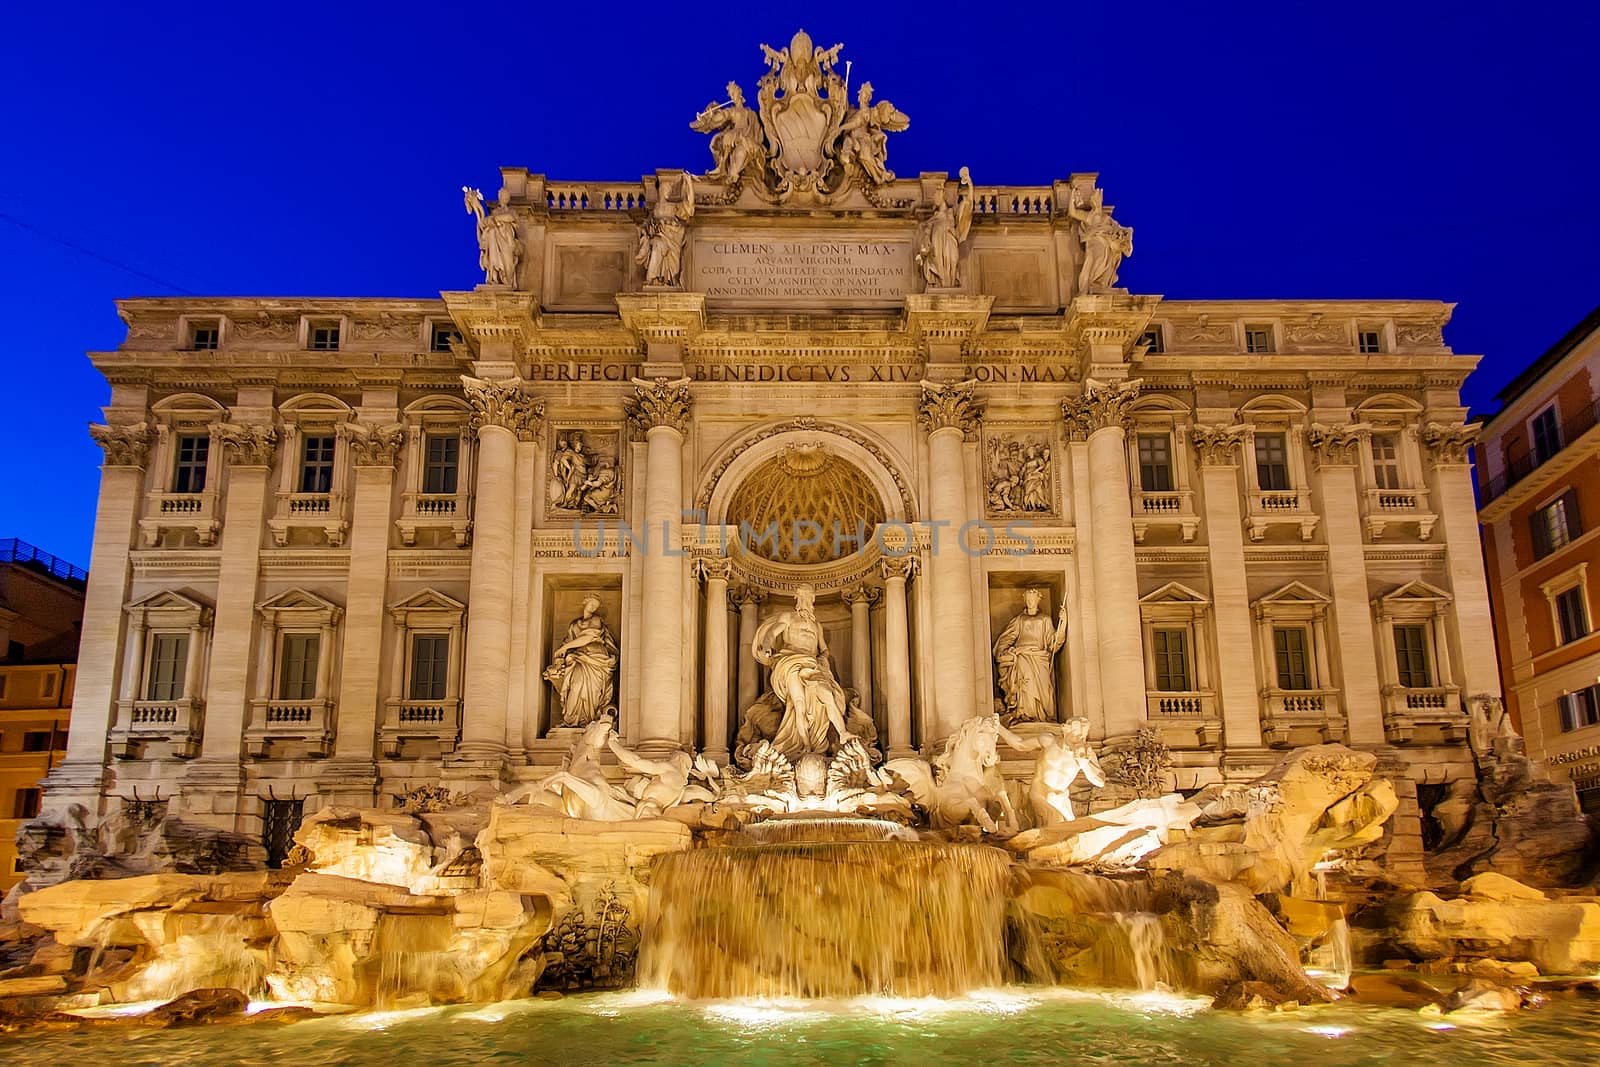 Trevi Fountain, Rome, Italy by castaldostudio